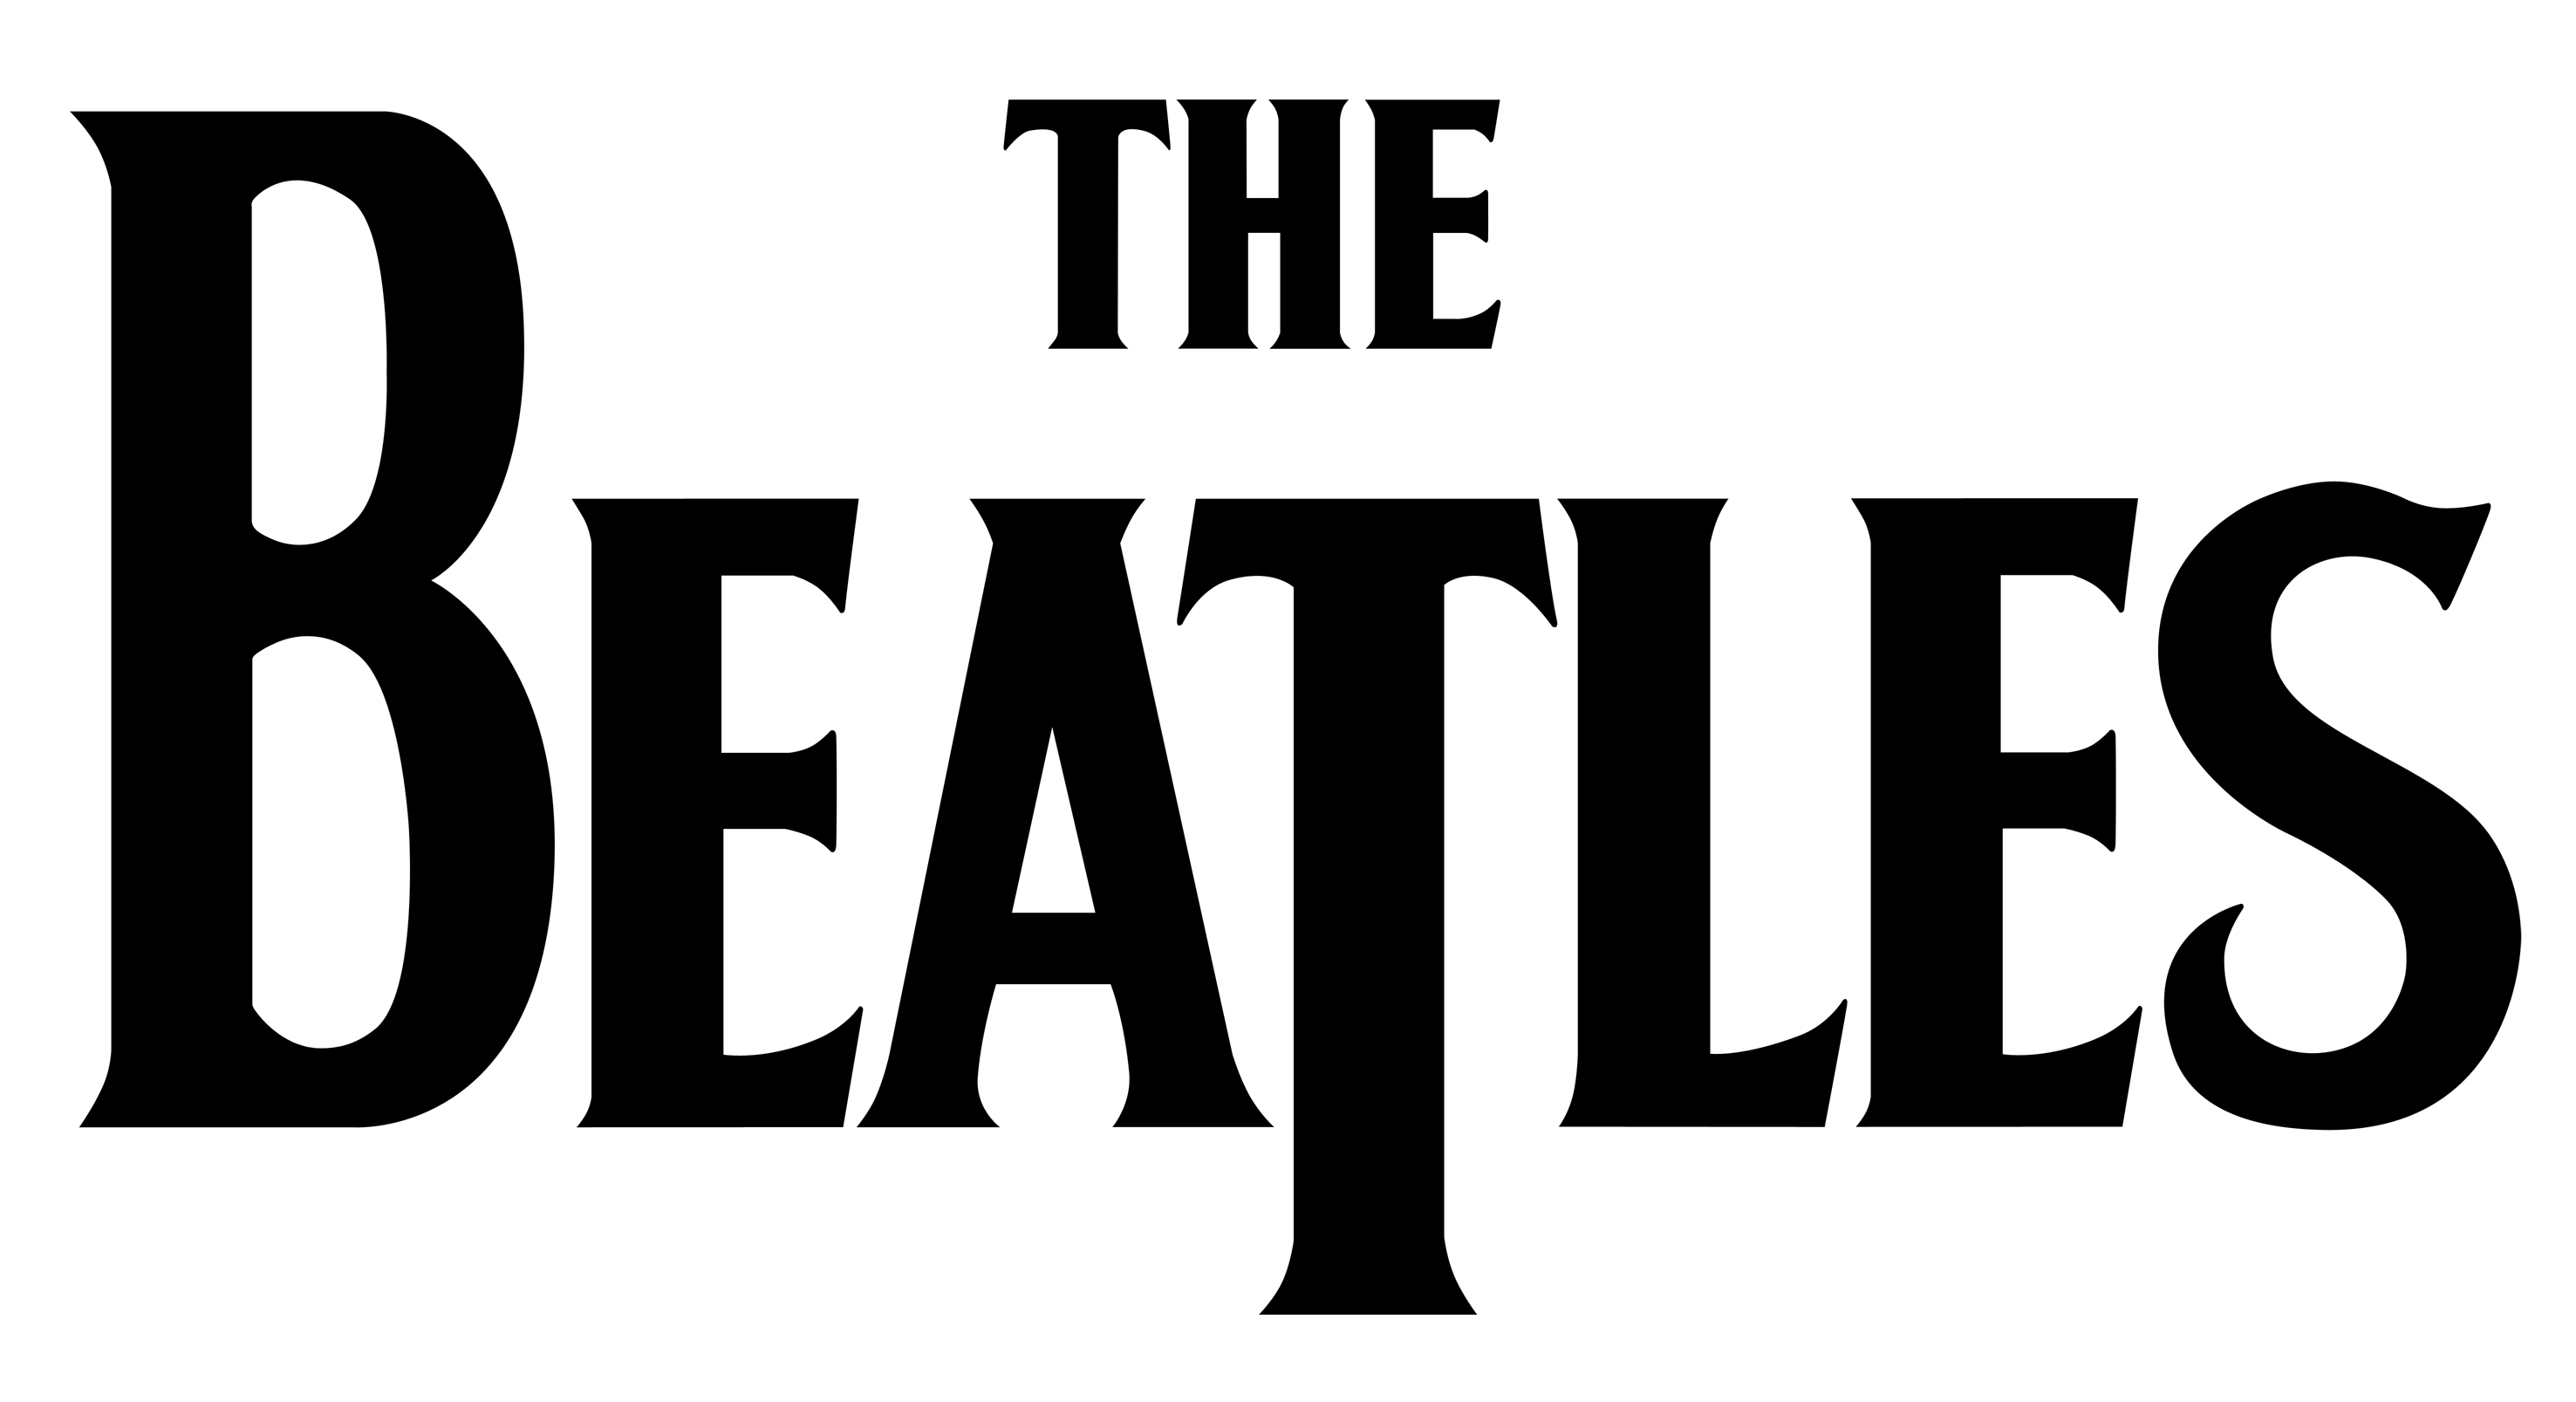 The beatles Logos